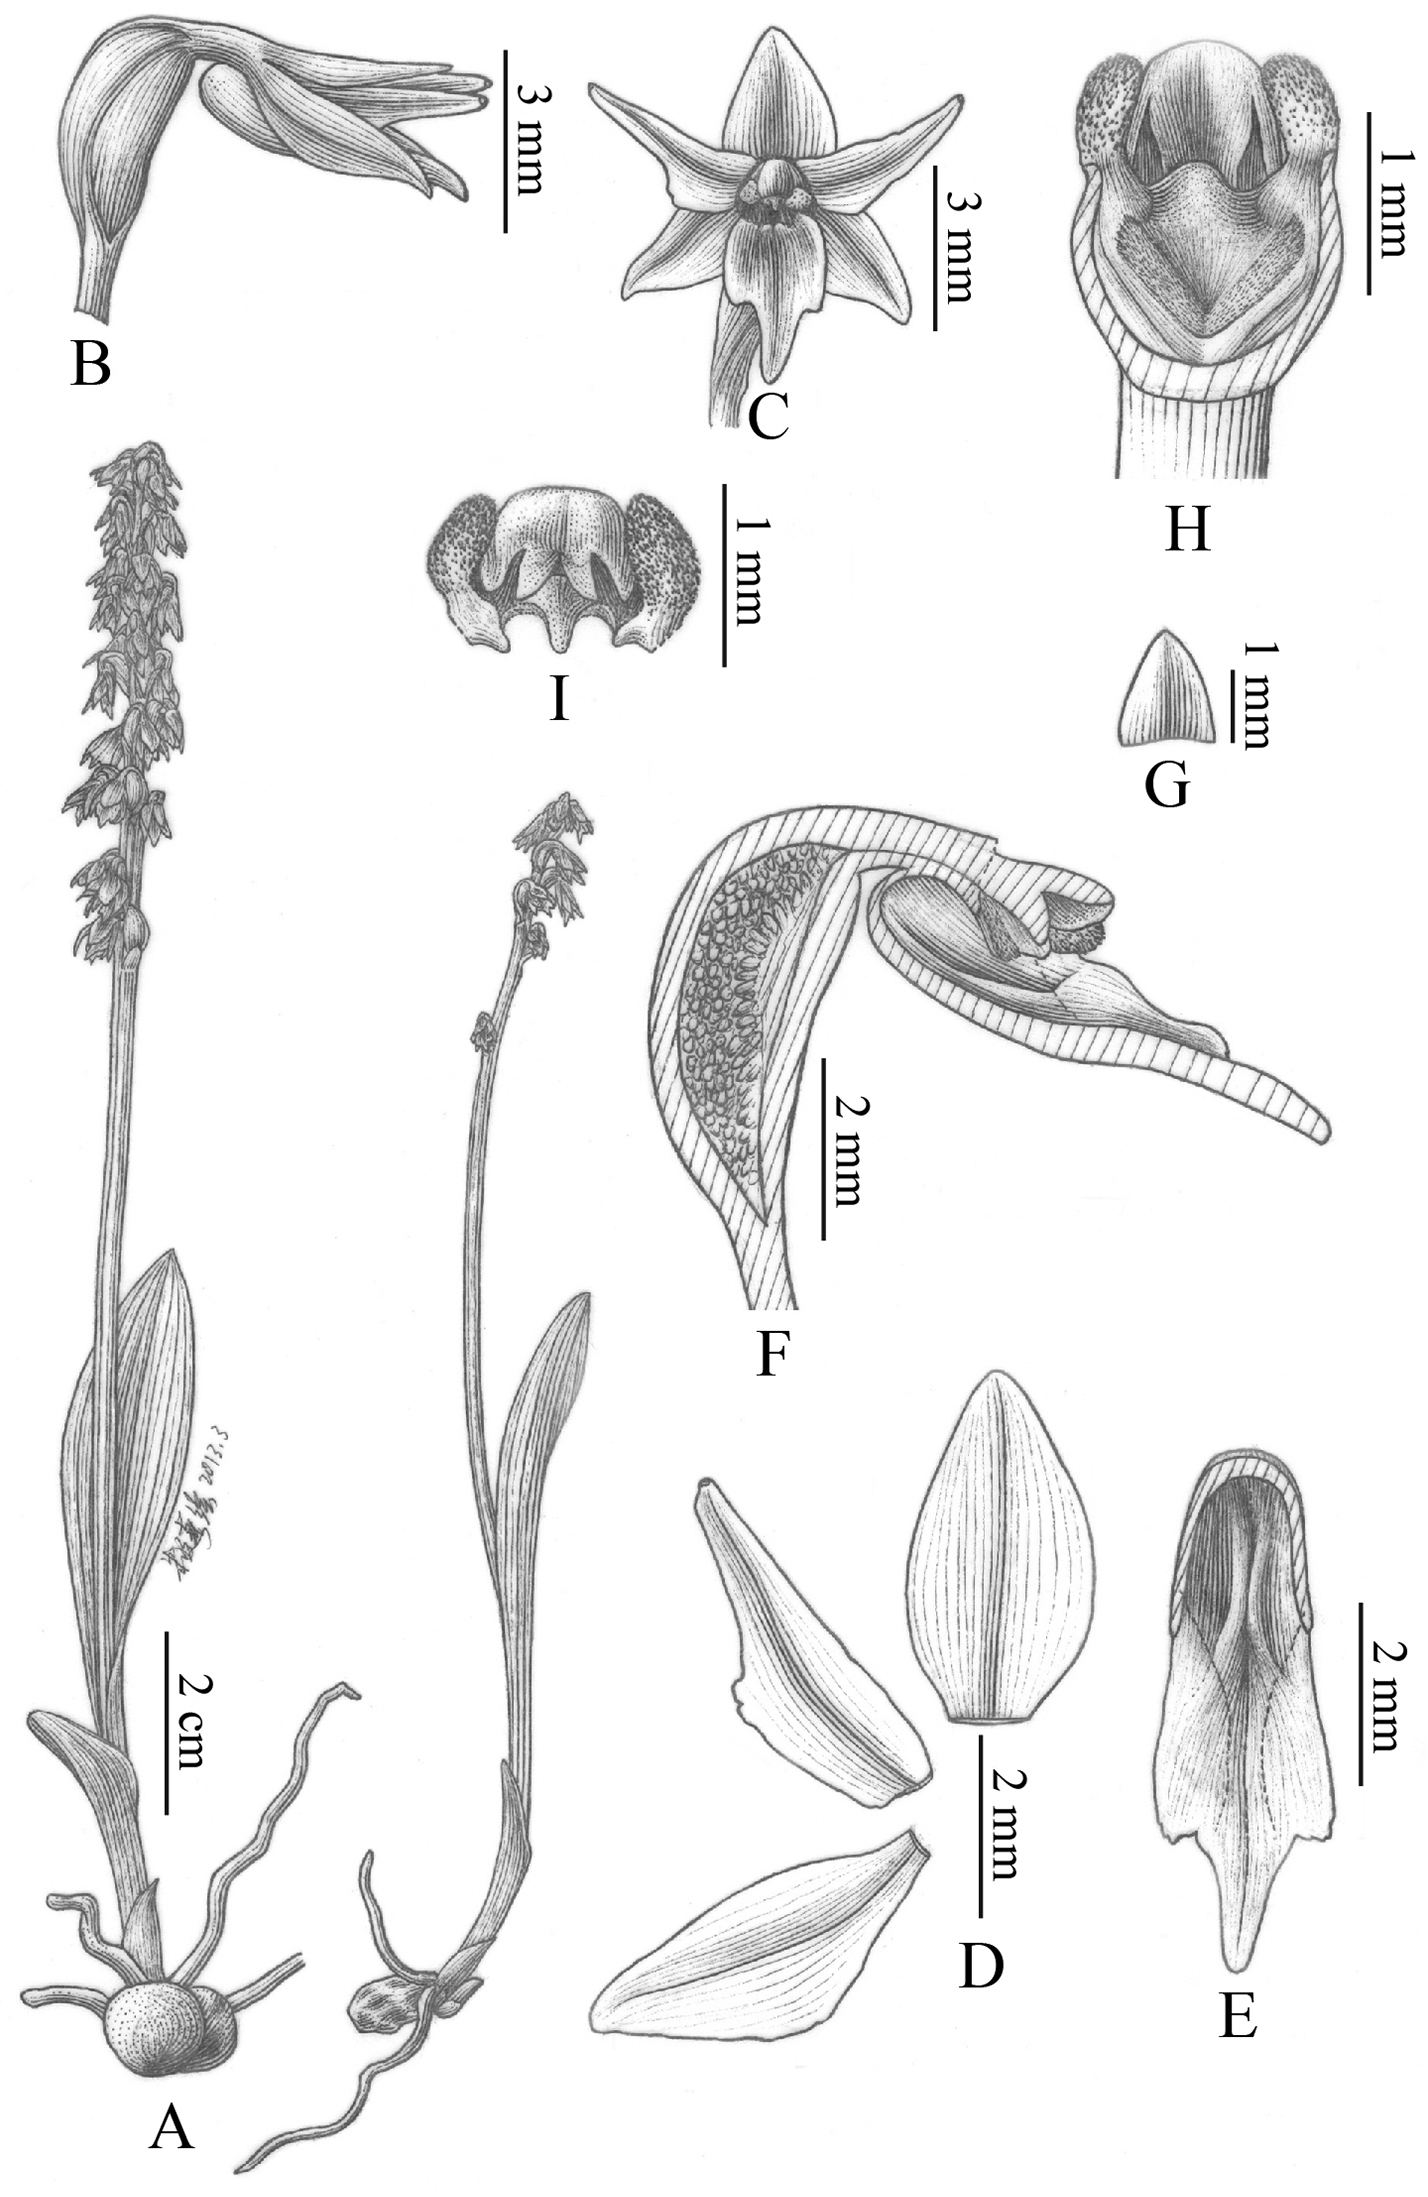 A taxonomic revision of Herminium L. (Orchidoideae, Orchidaceae)